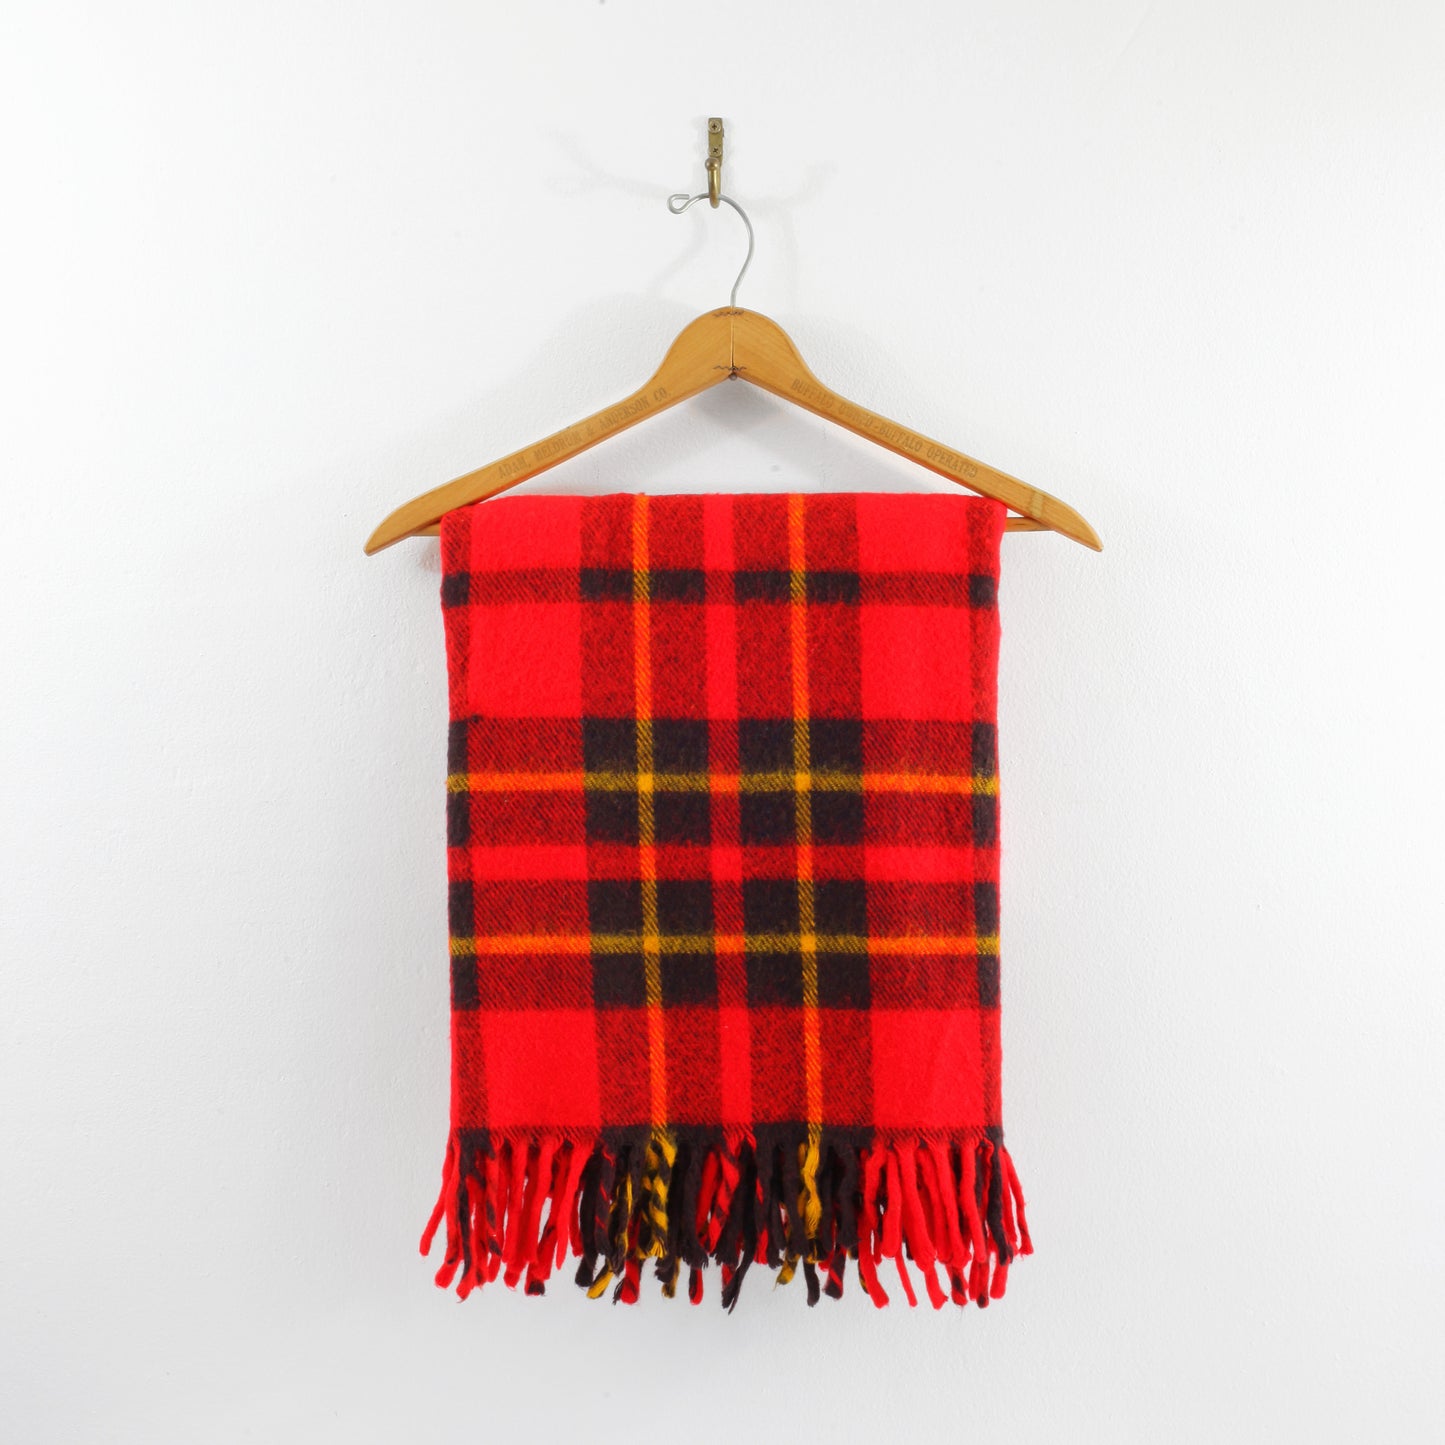 SOLD - Vintage Faribo Plaid Throw Blanket / Red, Yellow & Black